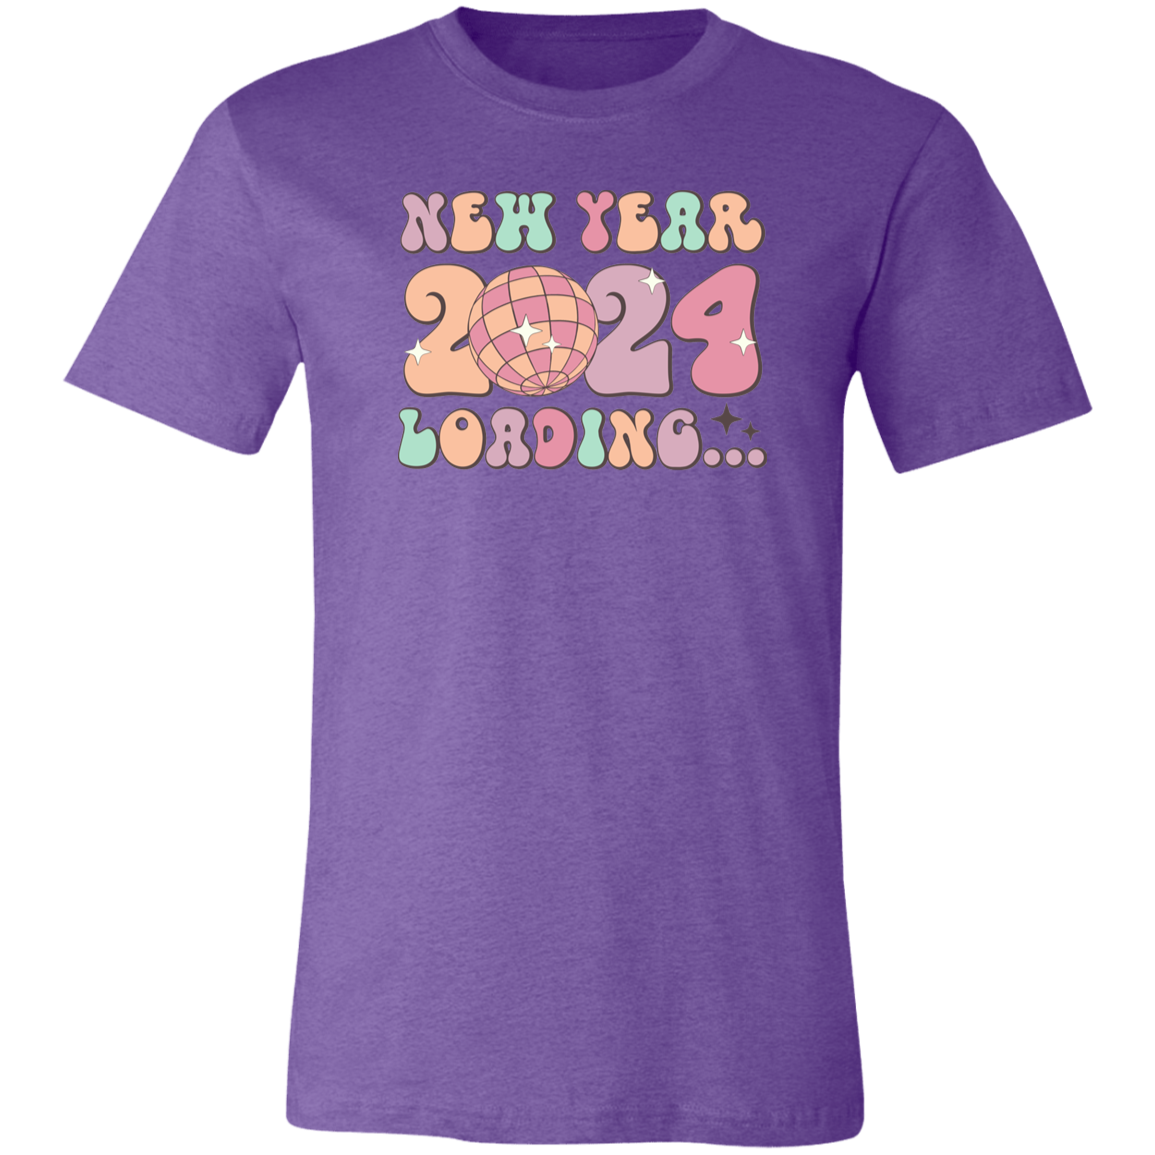 New Year 2024 Loading Shirt